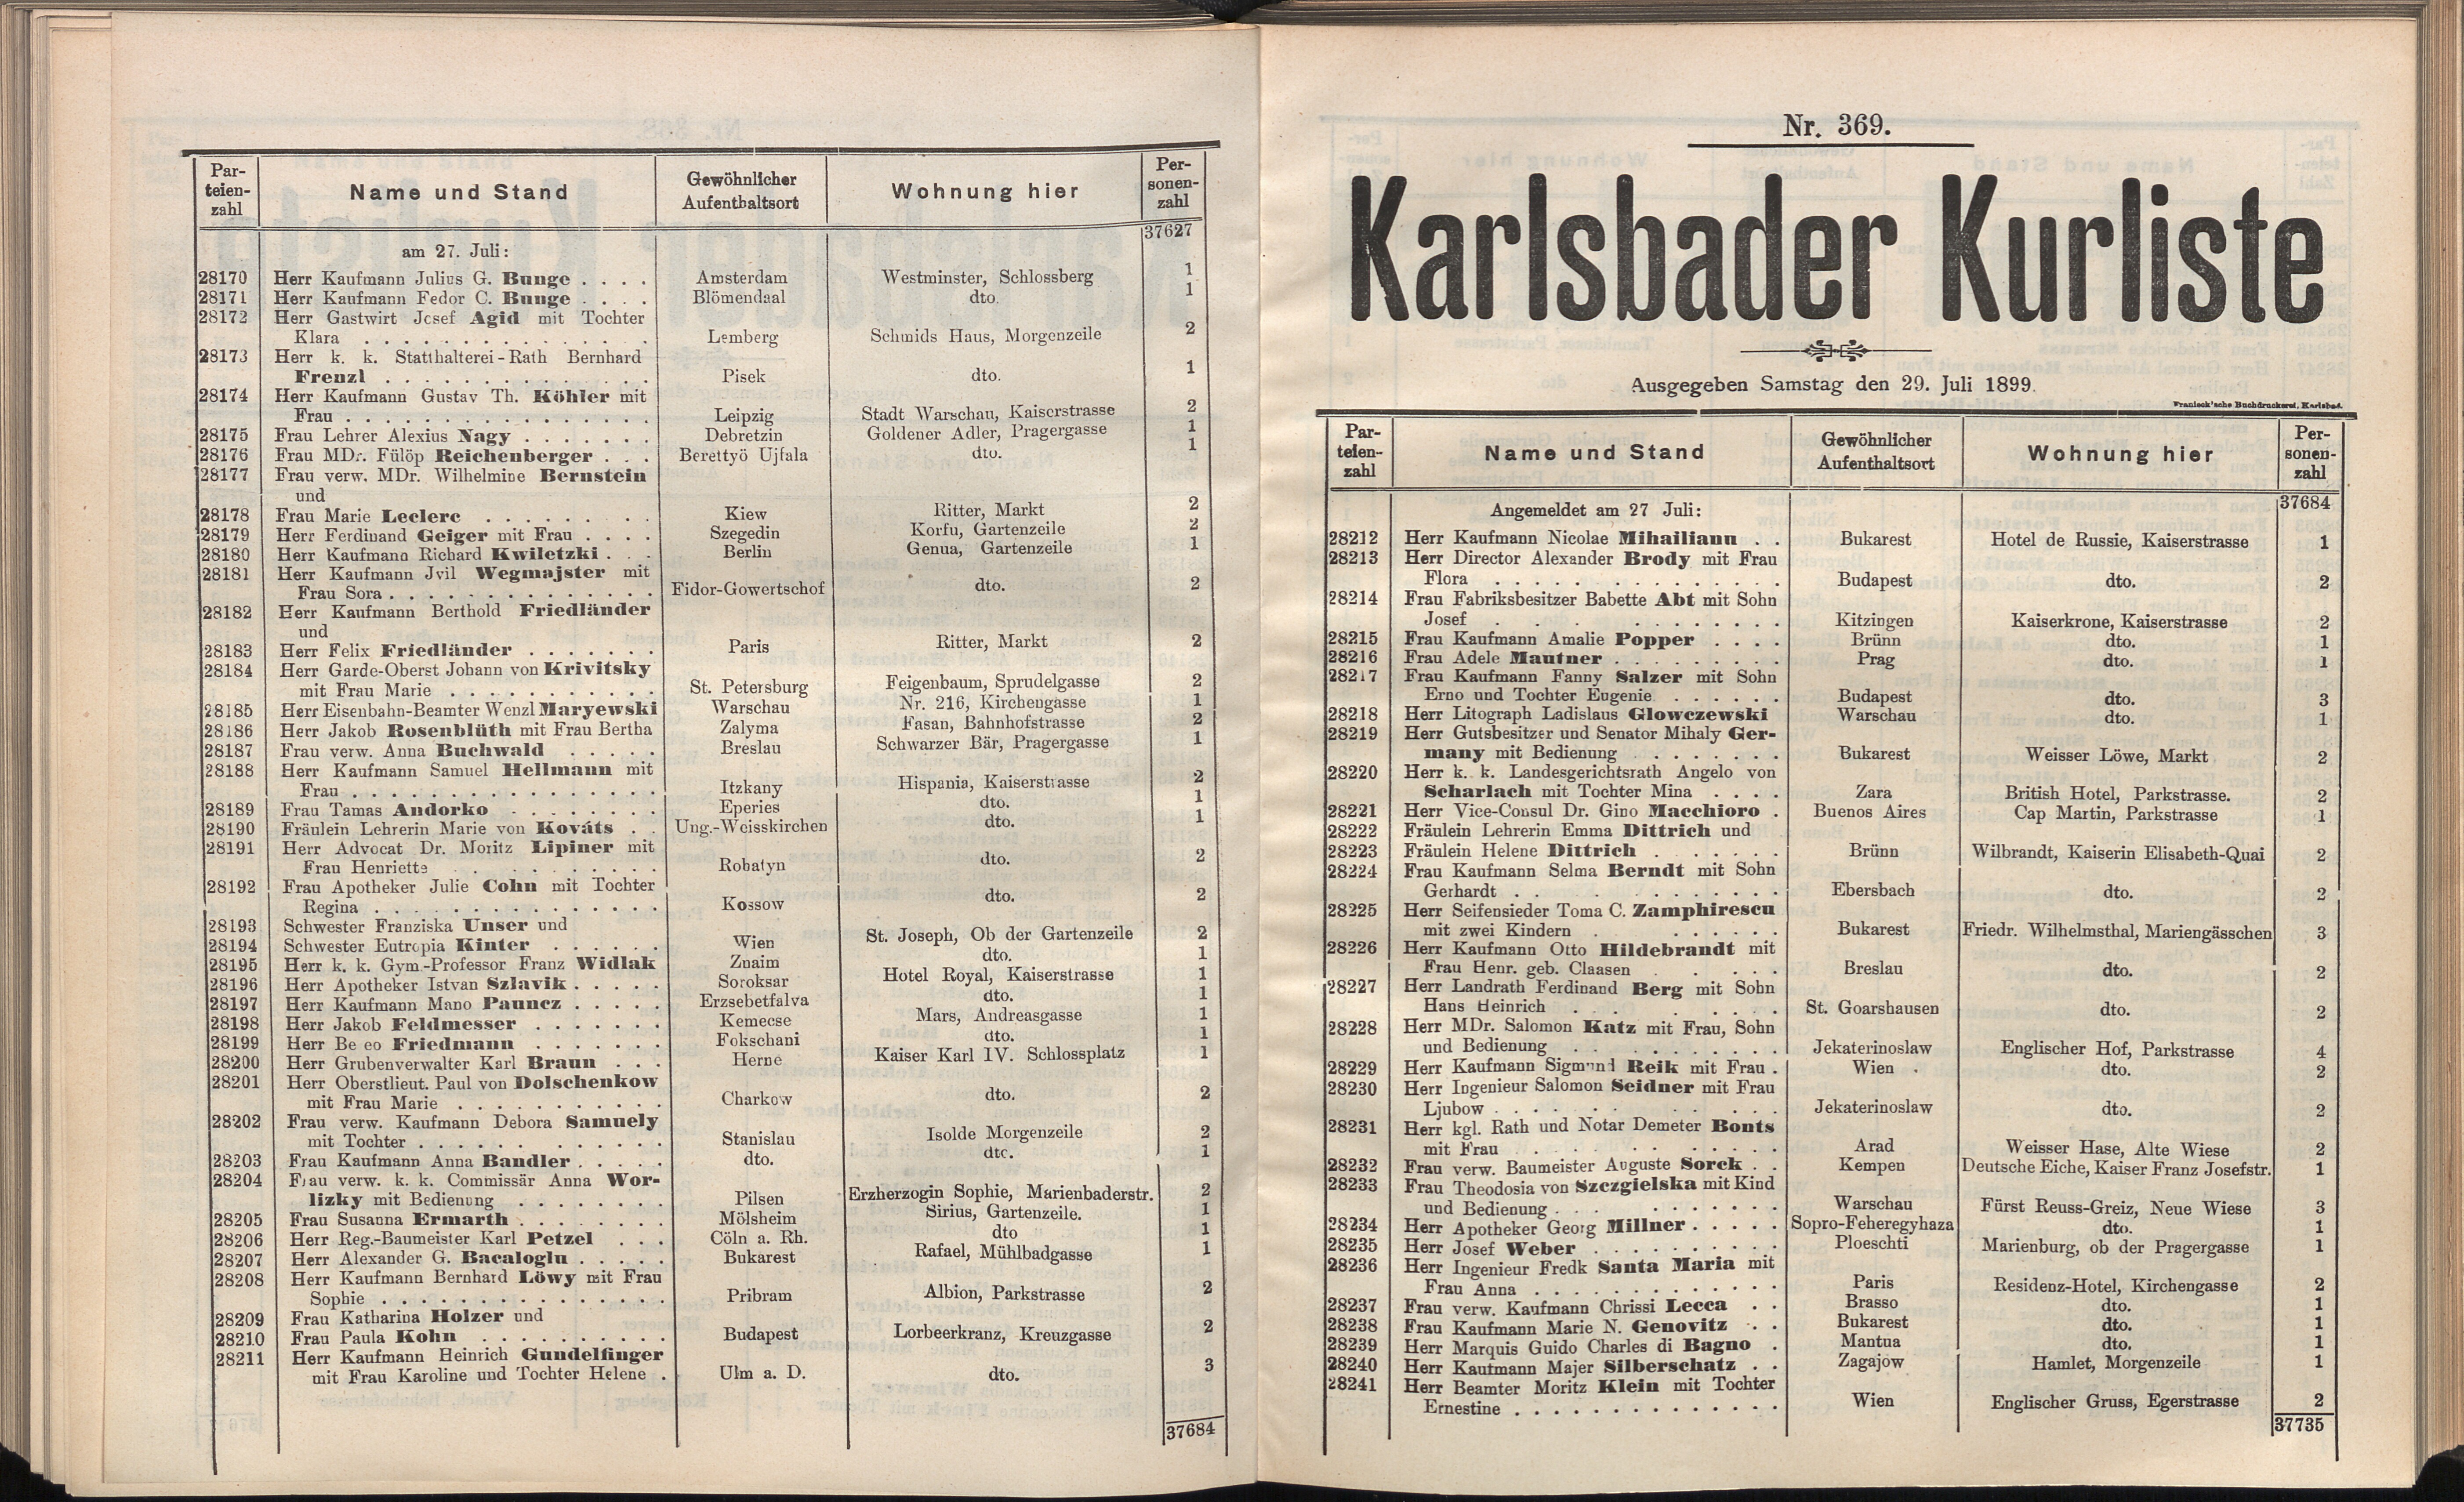 387. soap-kv_knihovna_karlsbader-kurliste-1899_3880